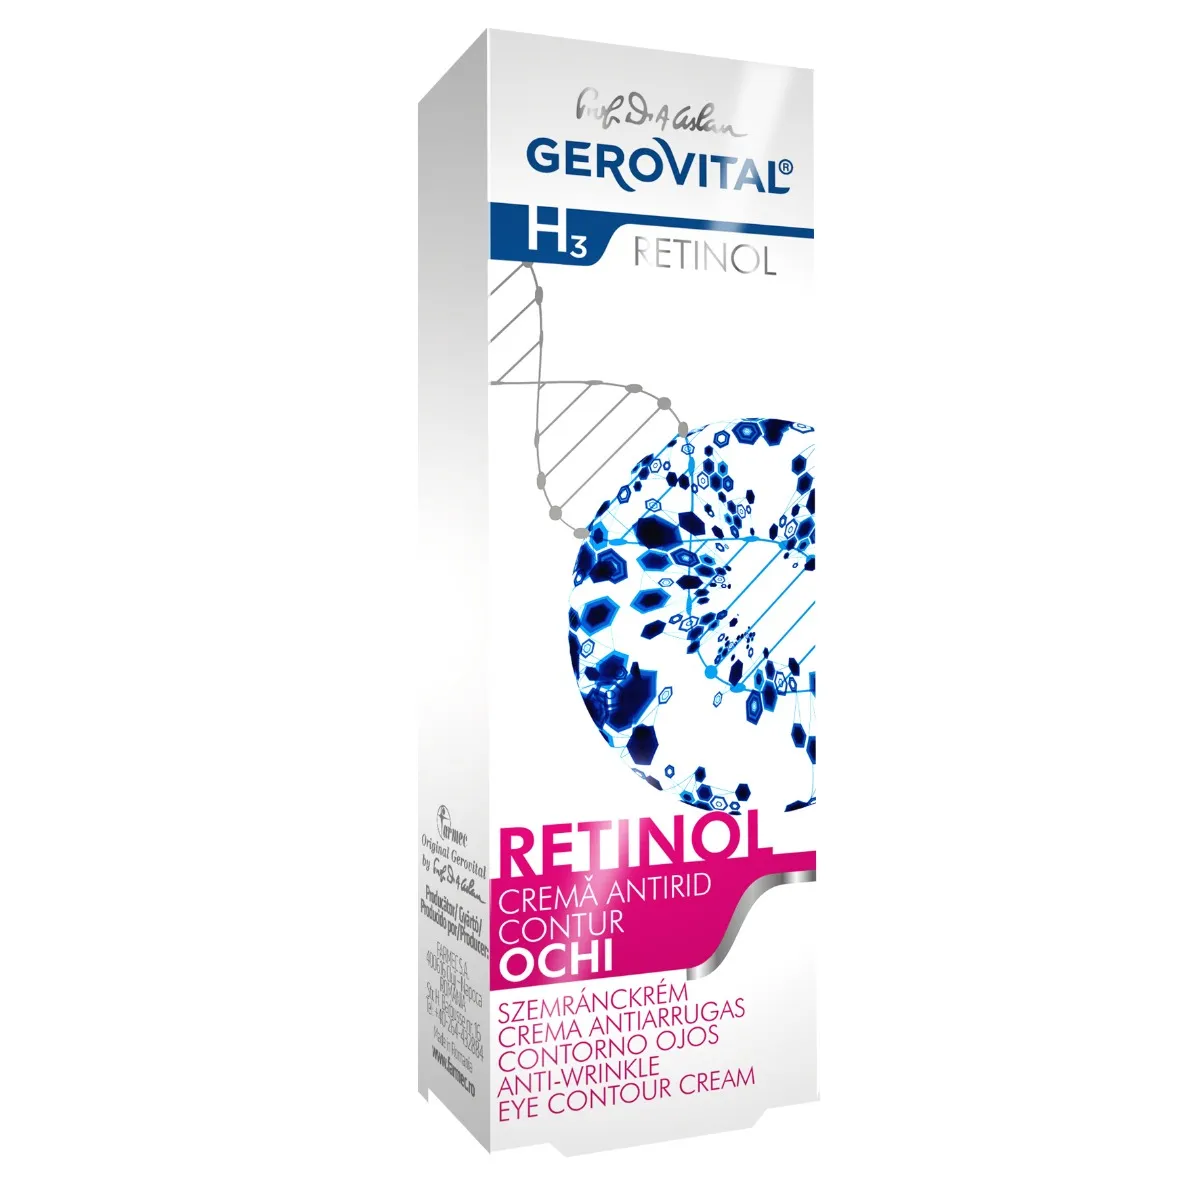 Crema antirid contur ochi H3 Retinol, 15ml, Gerovital 